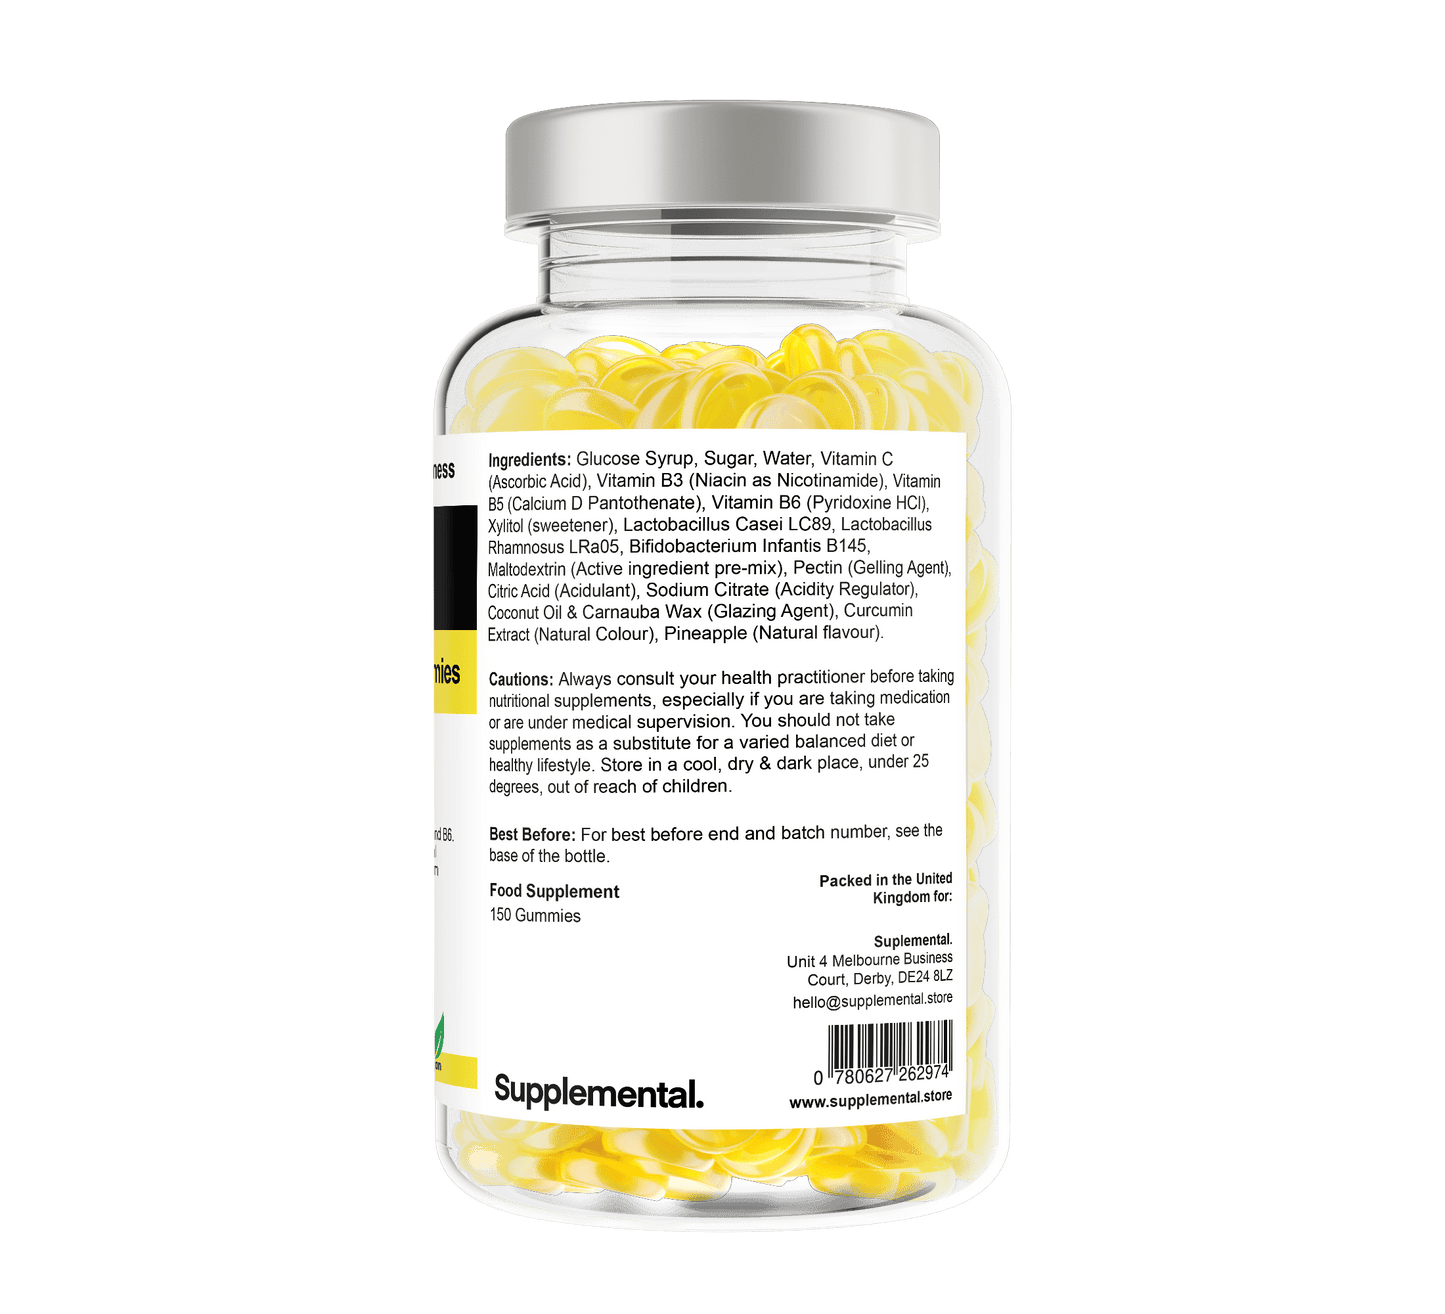 Family Vitamins & Probiotic Gummies - Supplemental